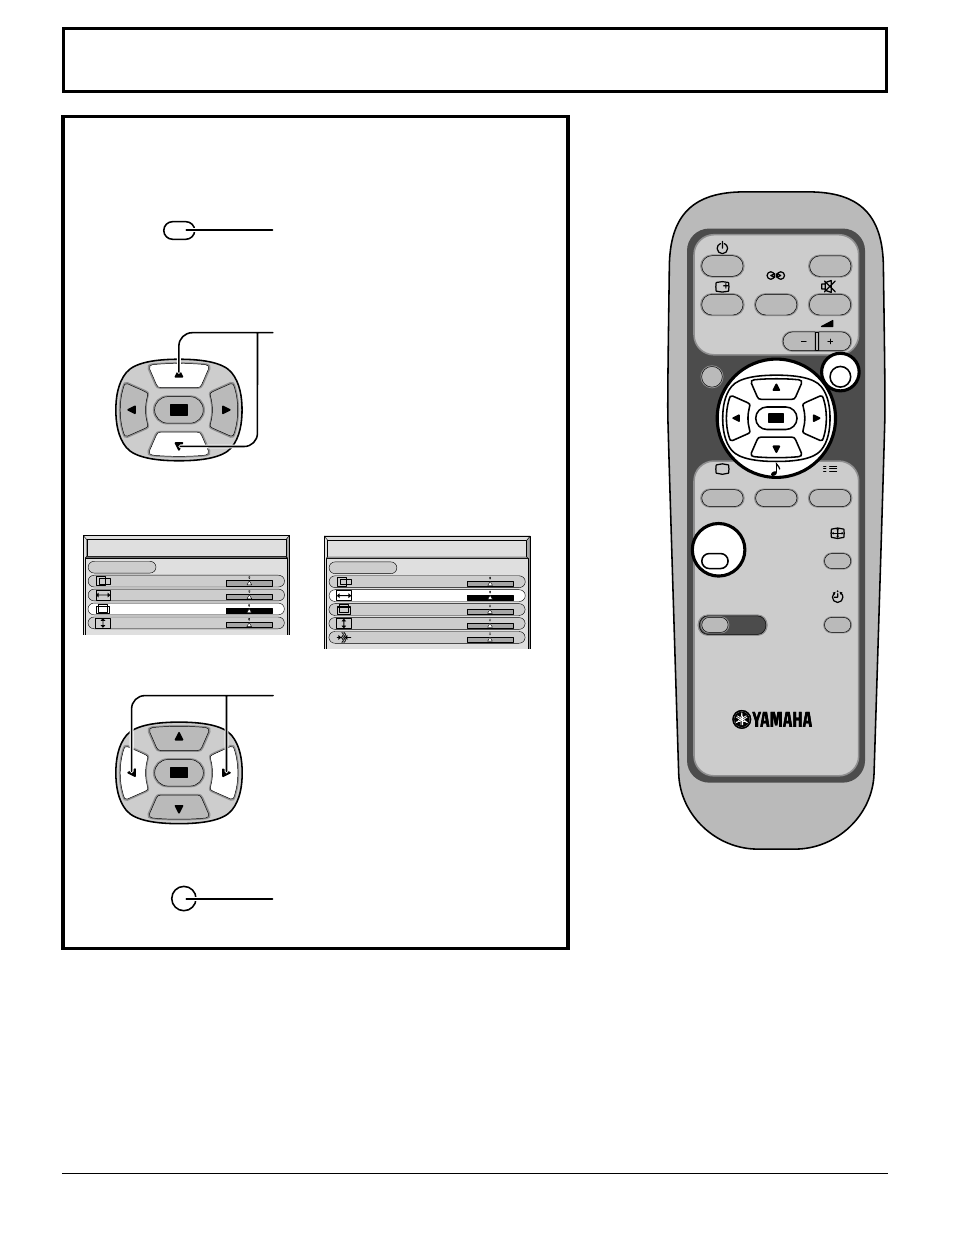 Adjusting picture position/size, Adjusting screen | Yamaha PDM-1 User Manual | Page 24 / 40